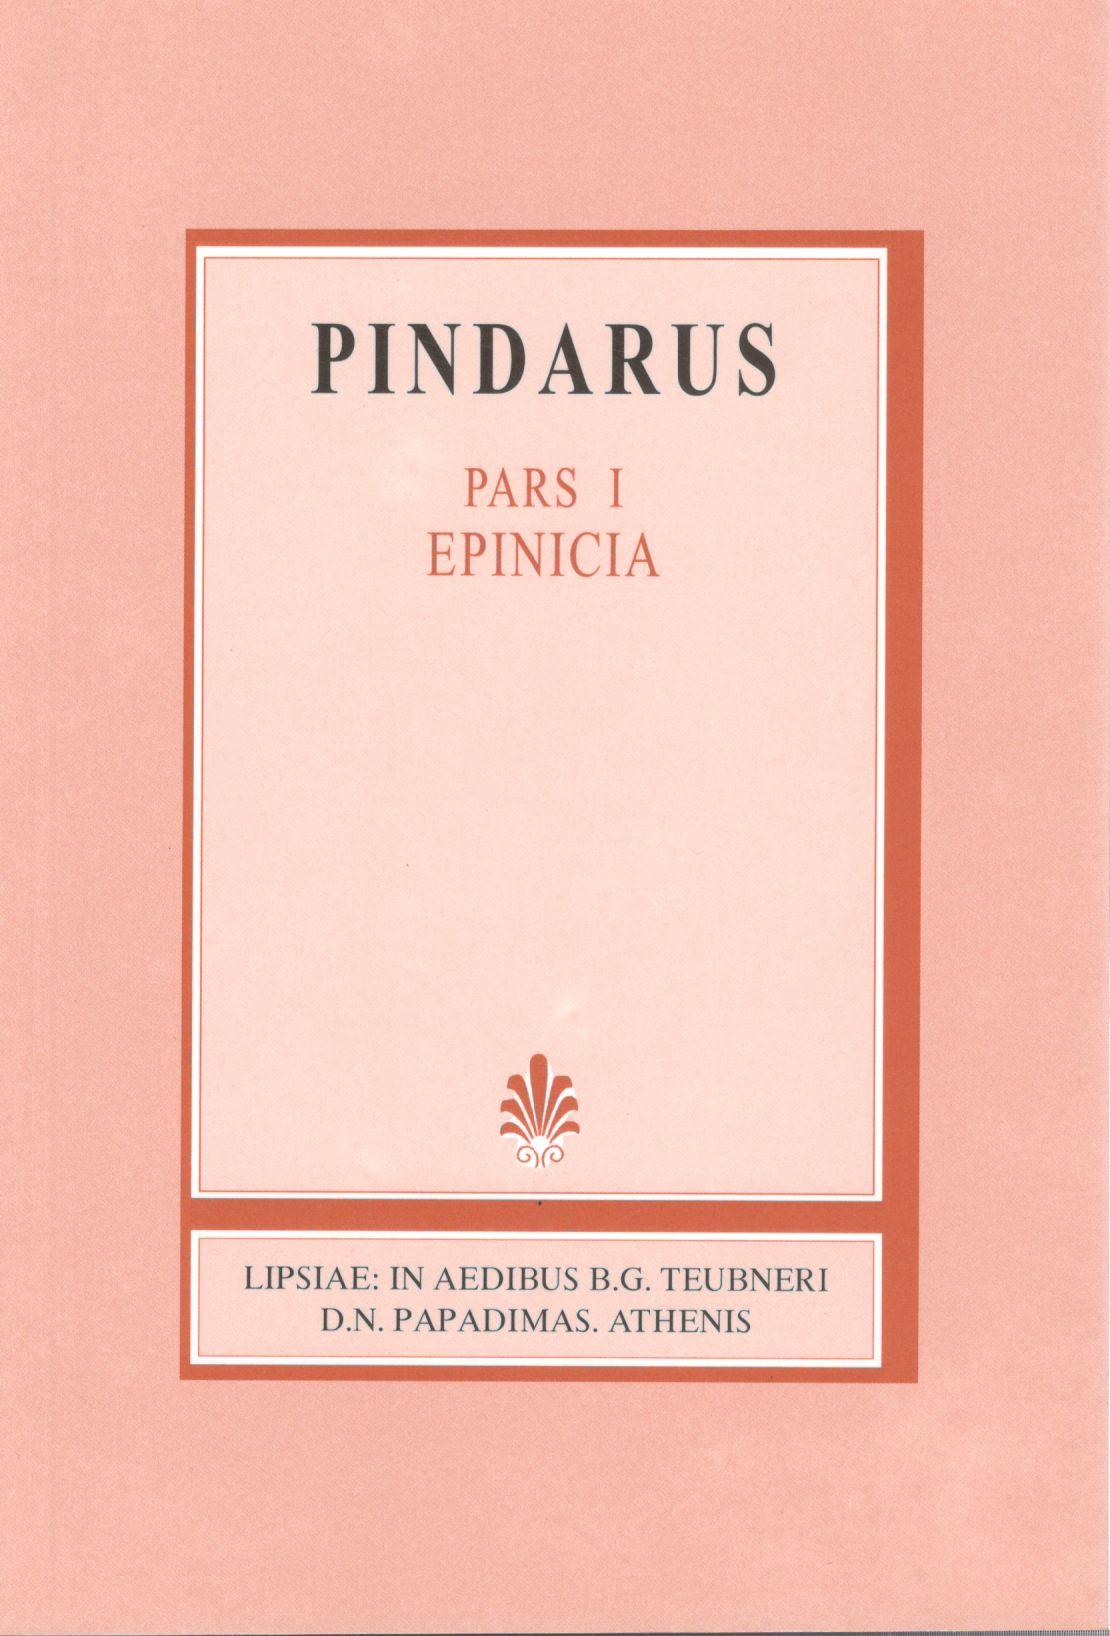 Pindari carmina [Πινδάρου Ωδαί]